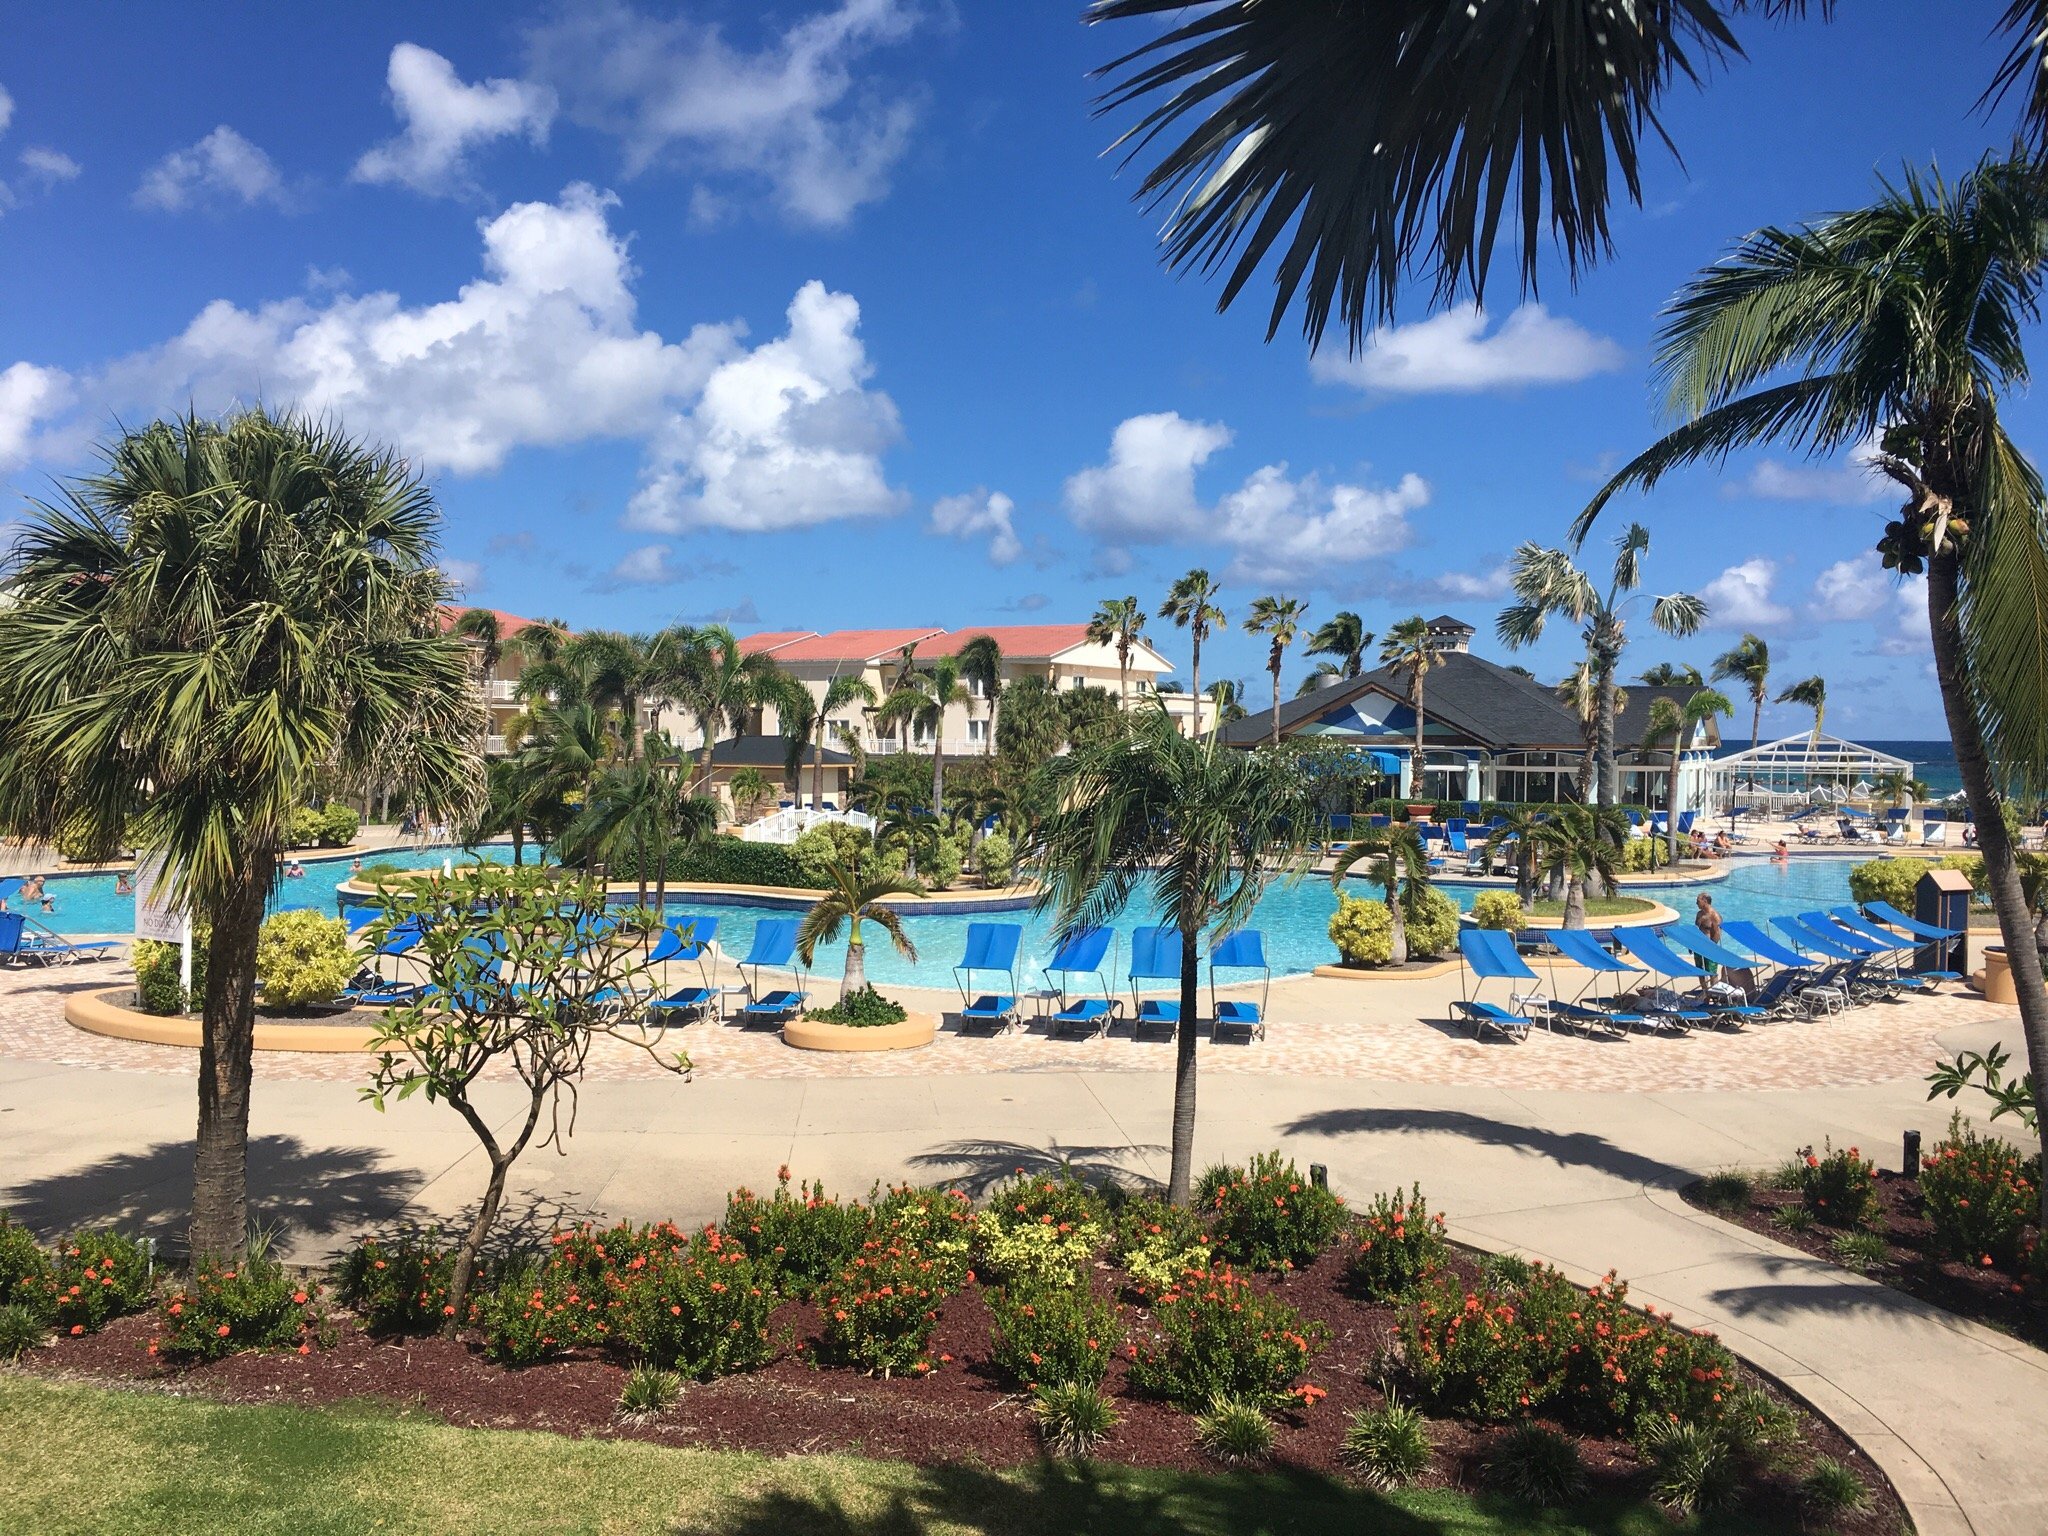 Marriott's St. Kitts Beach Club Pool Area